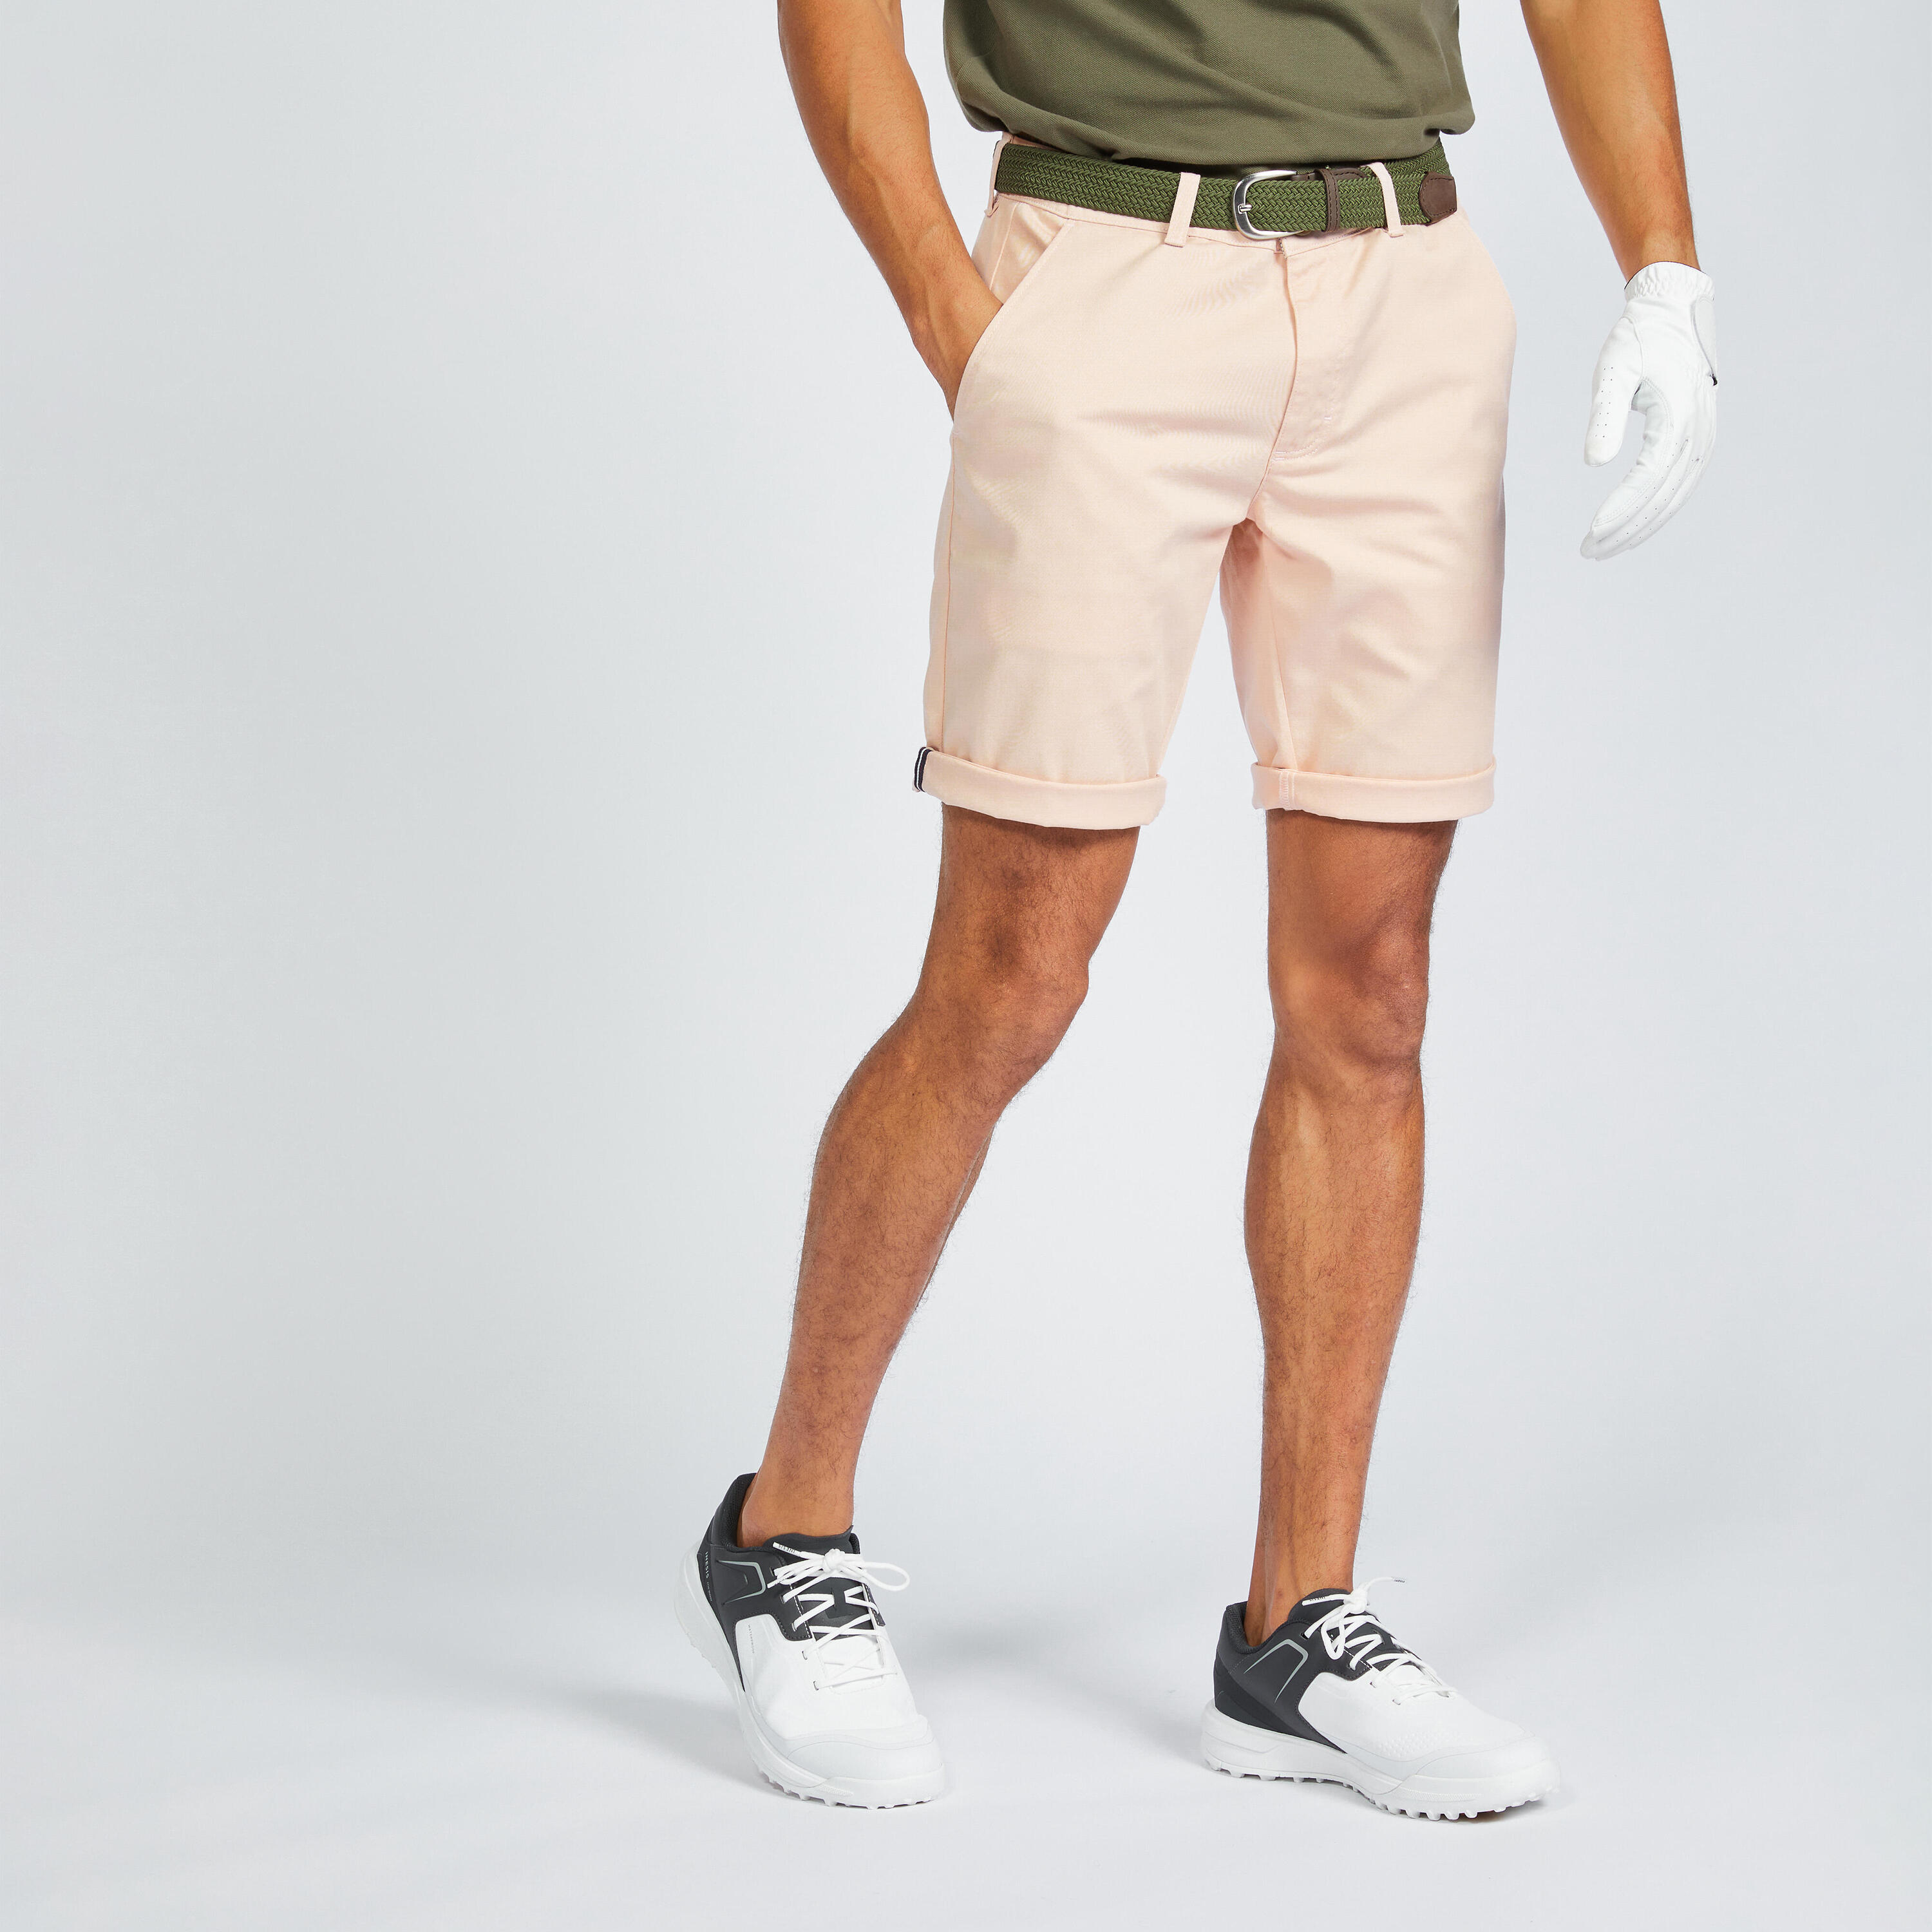 INESIS Men's golf chino shorts - MW500 pale pink